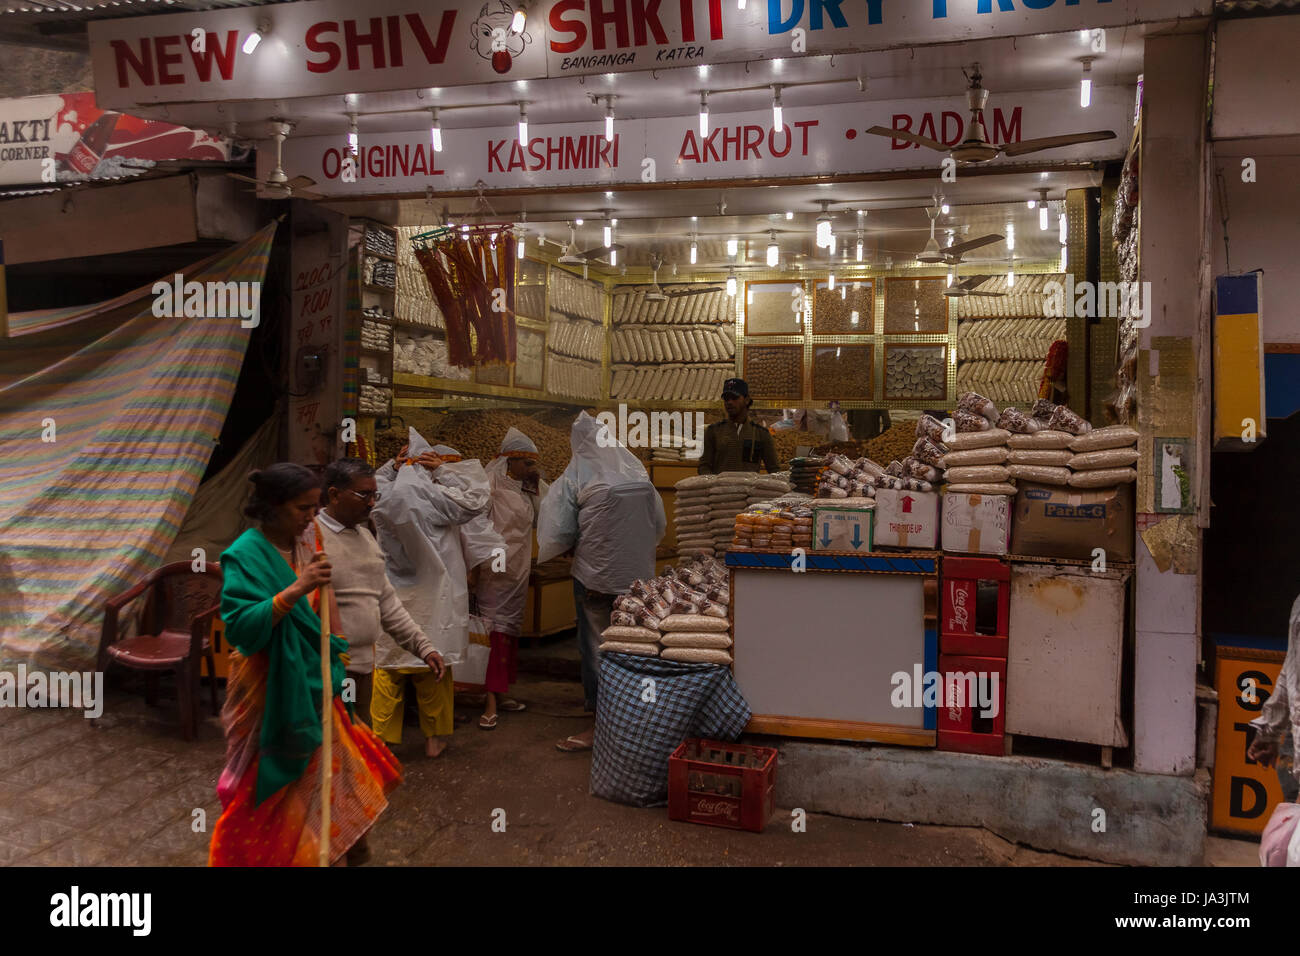 Rice and Nut stall at the foot of Shri Mata Vaishno Devi Shrine in Kashmir Stock Photo